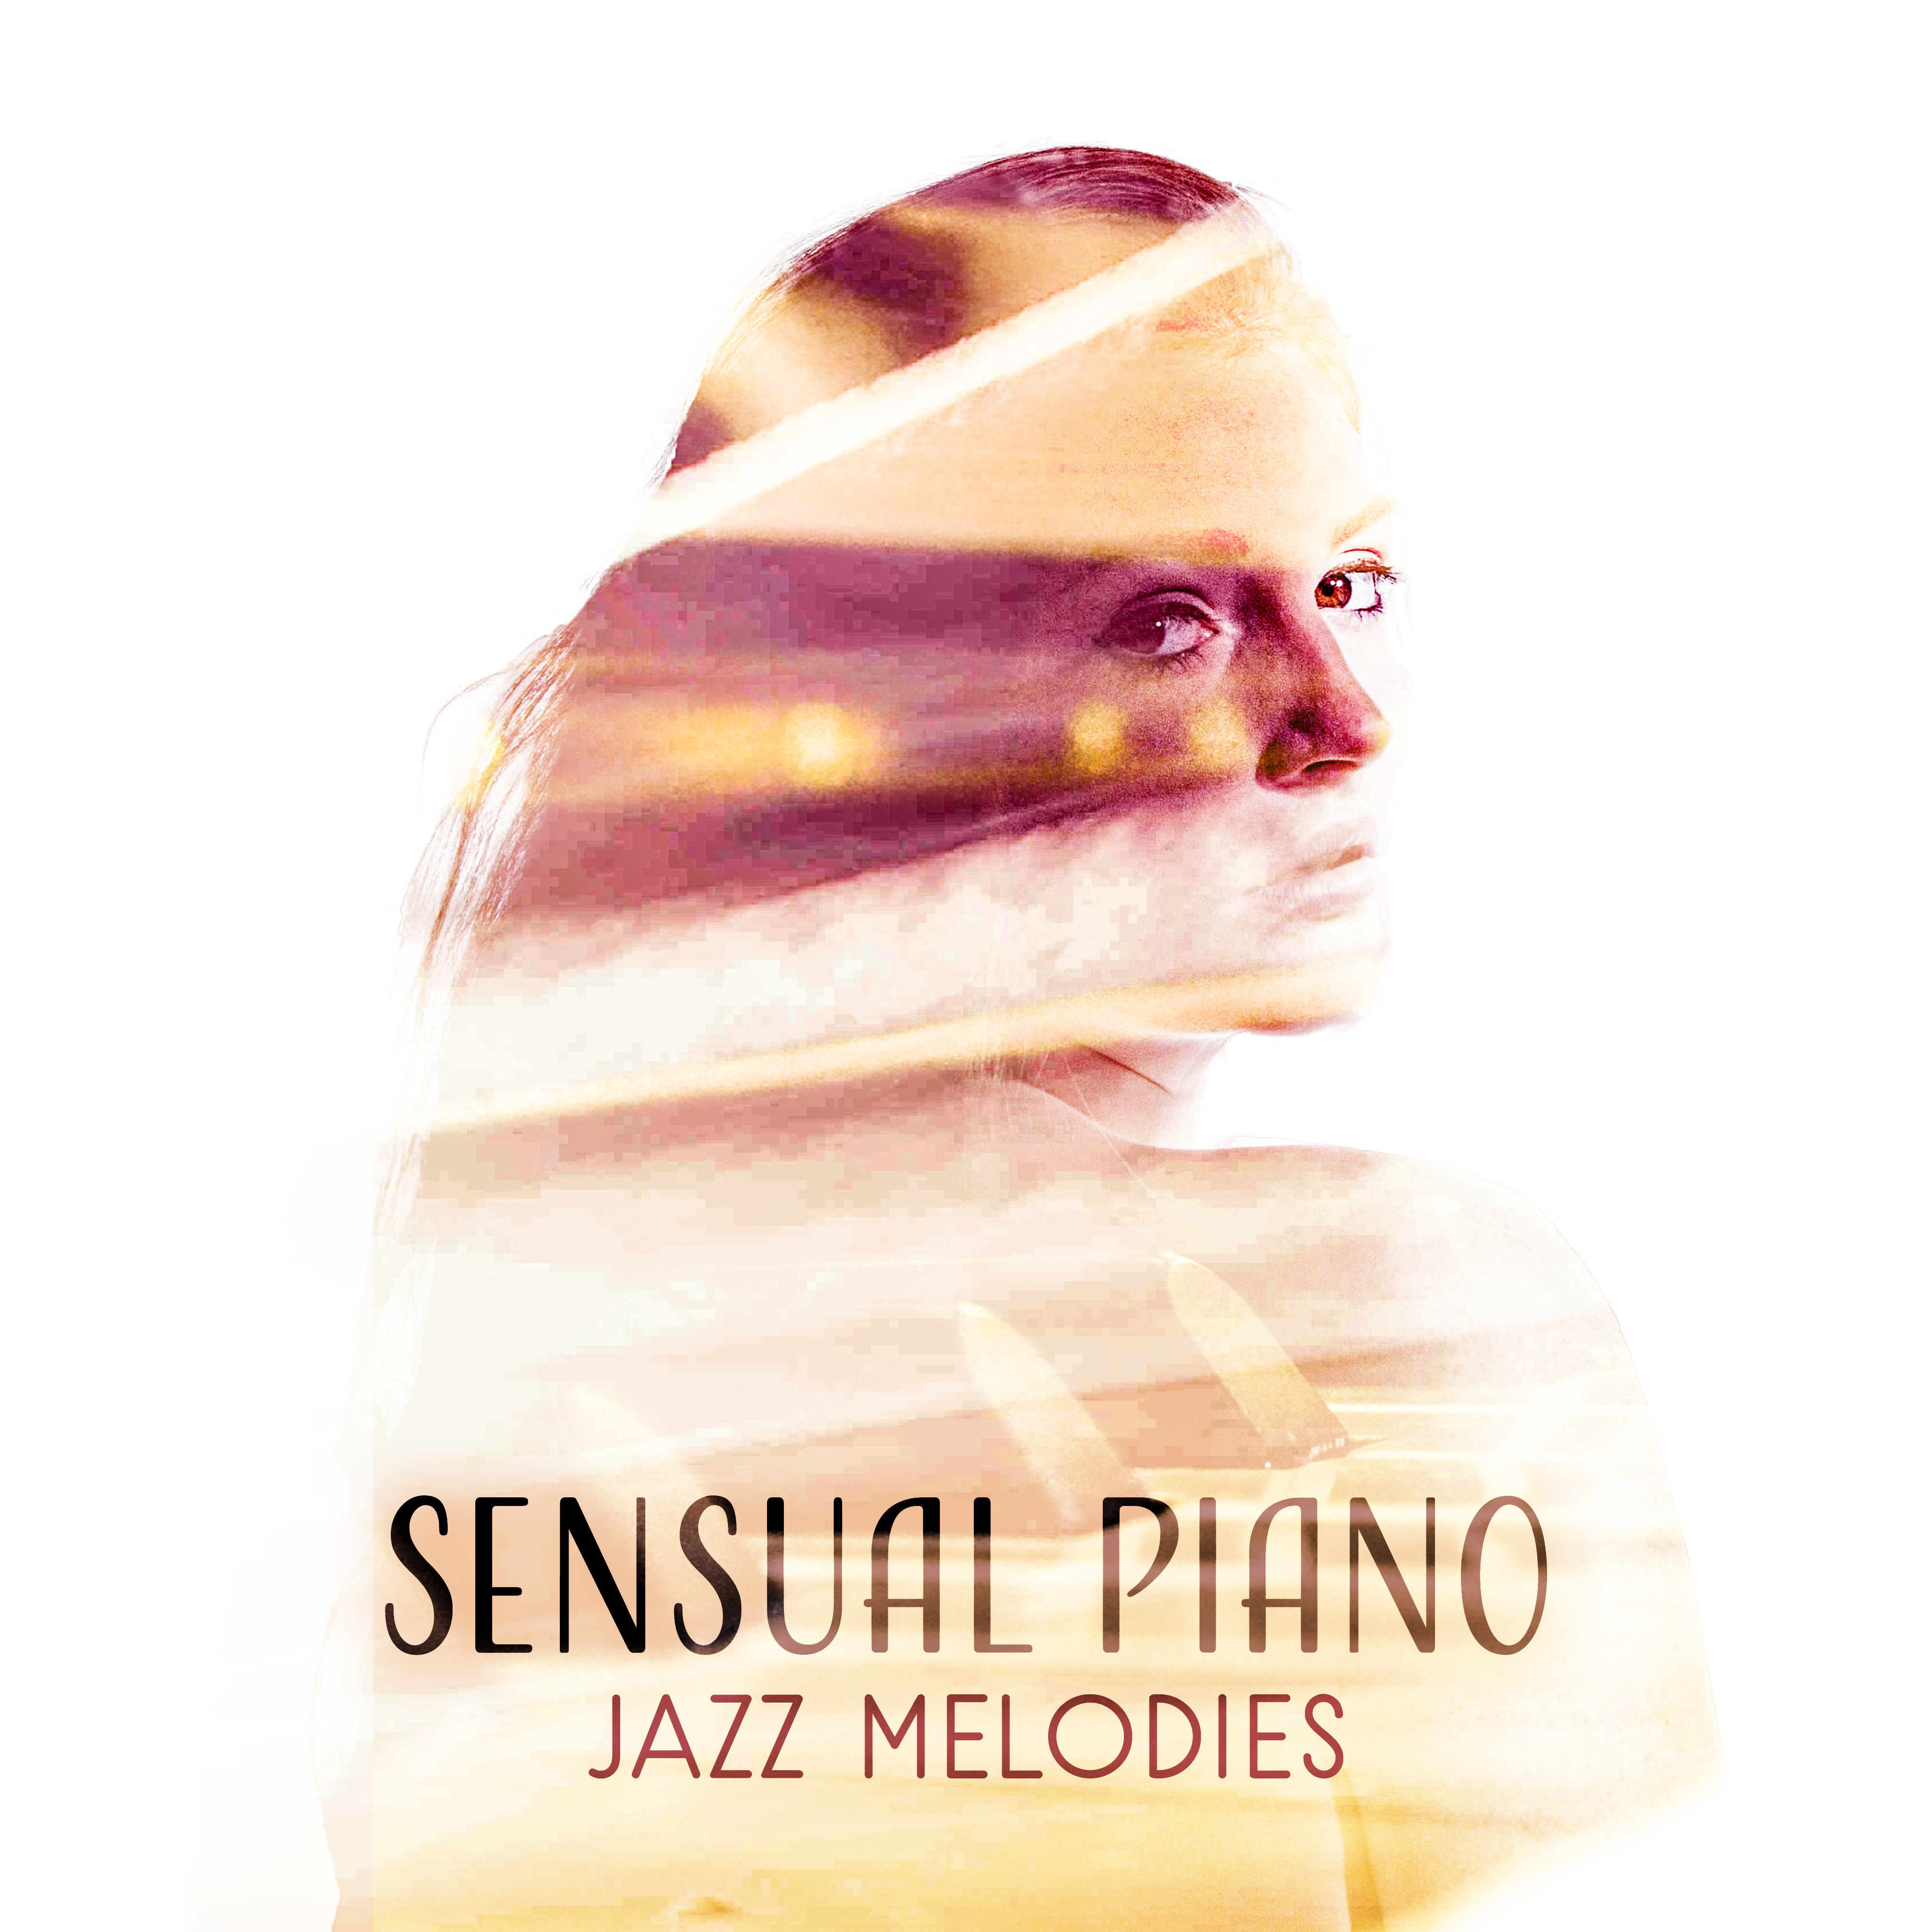 Sensual Piano Jazz Melodies – Romantic Background Jazz, Music to Fall in Love, **** Jazz Music